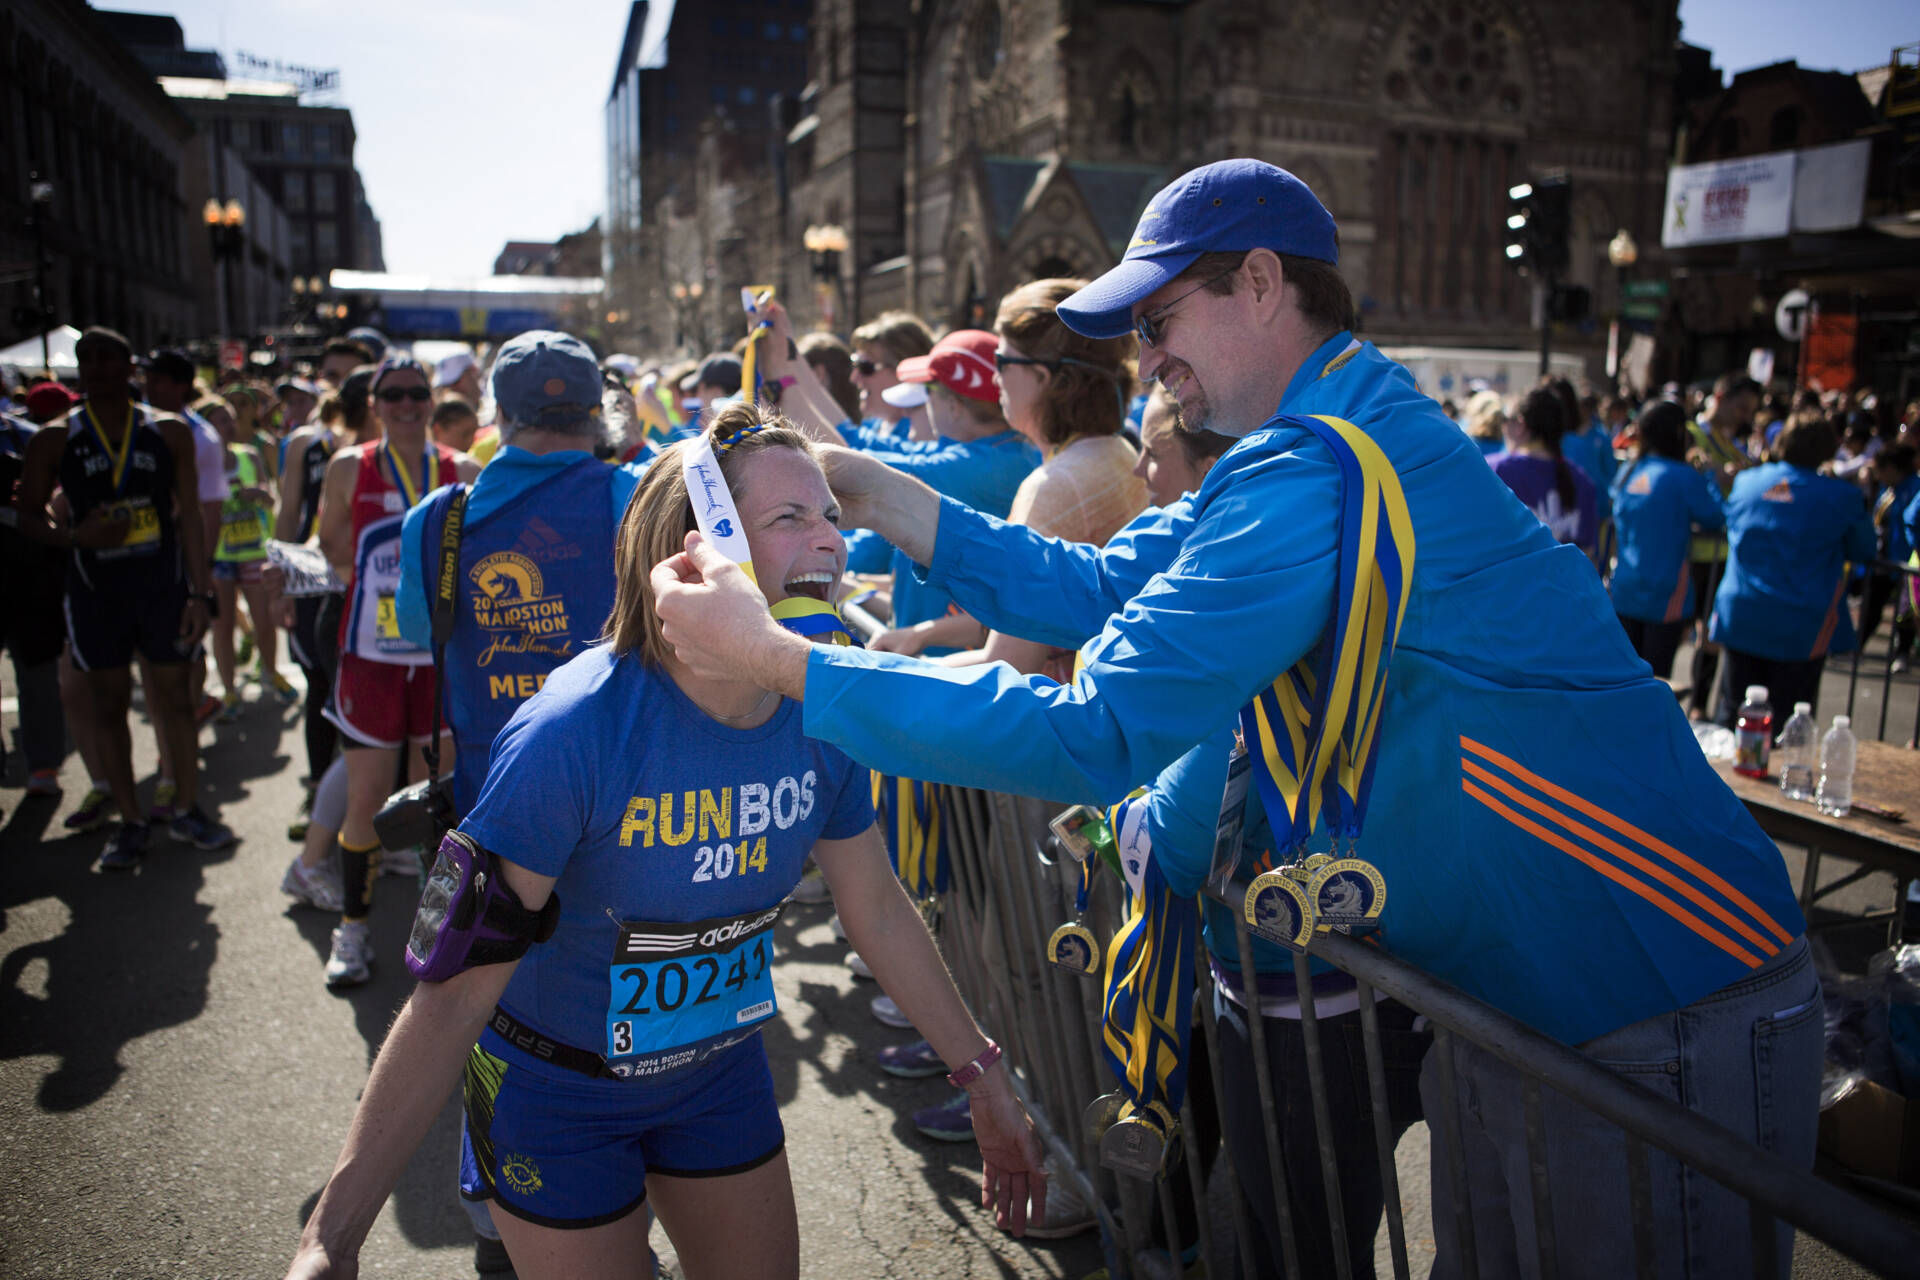 A runner receives her medal for completing the Boston Marathon. (Jesse Costa/WBUR)